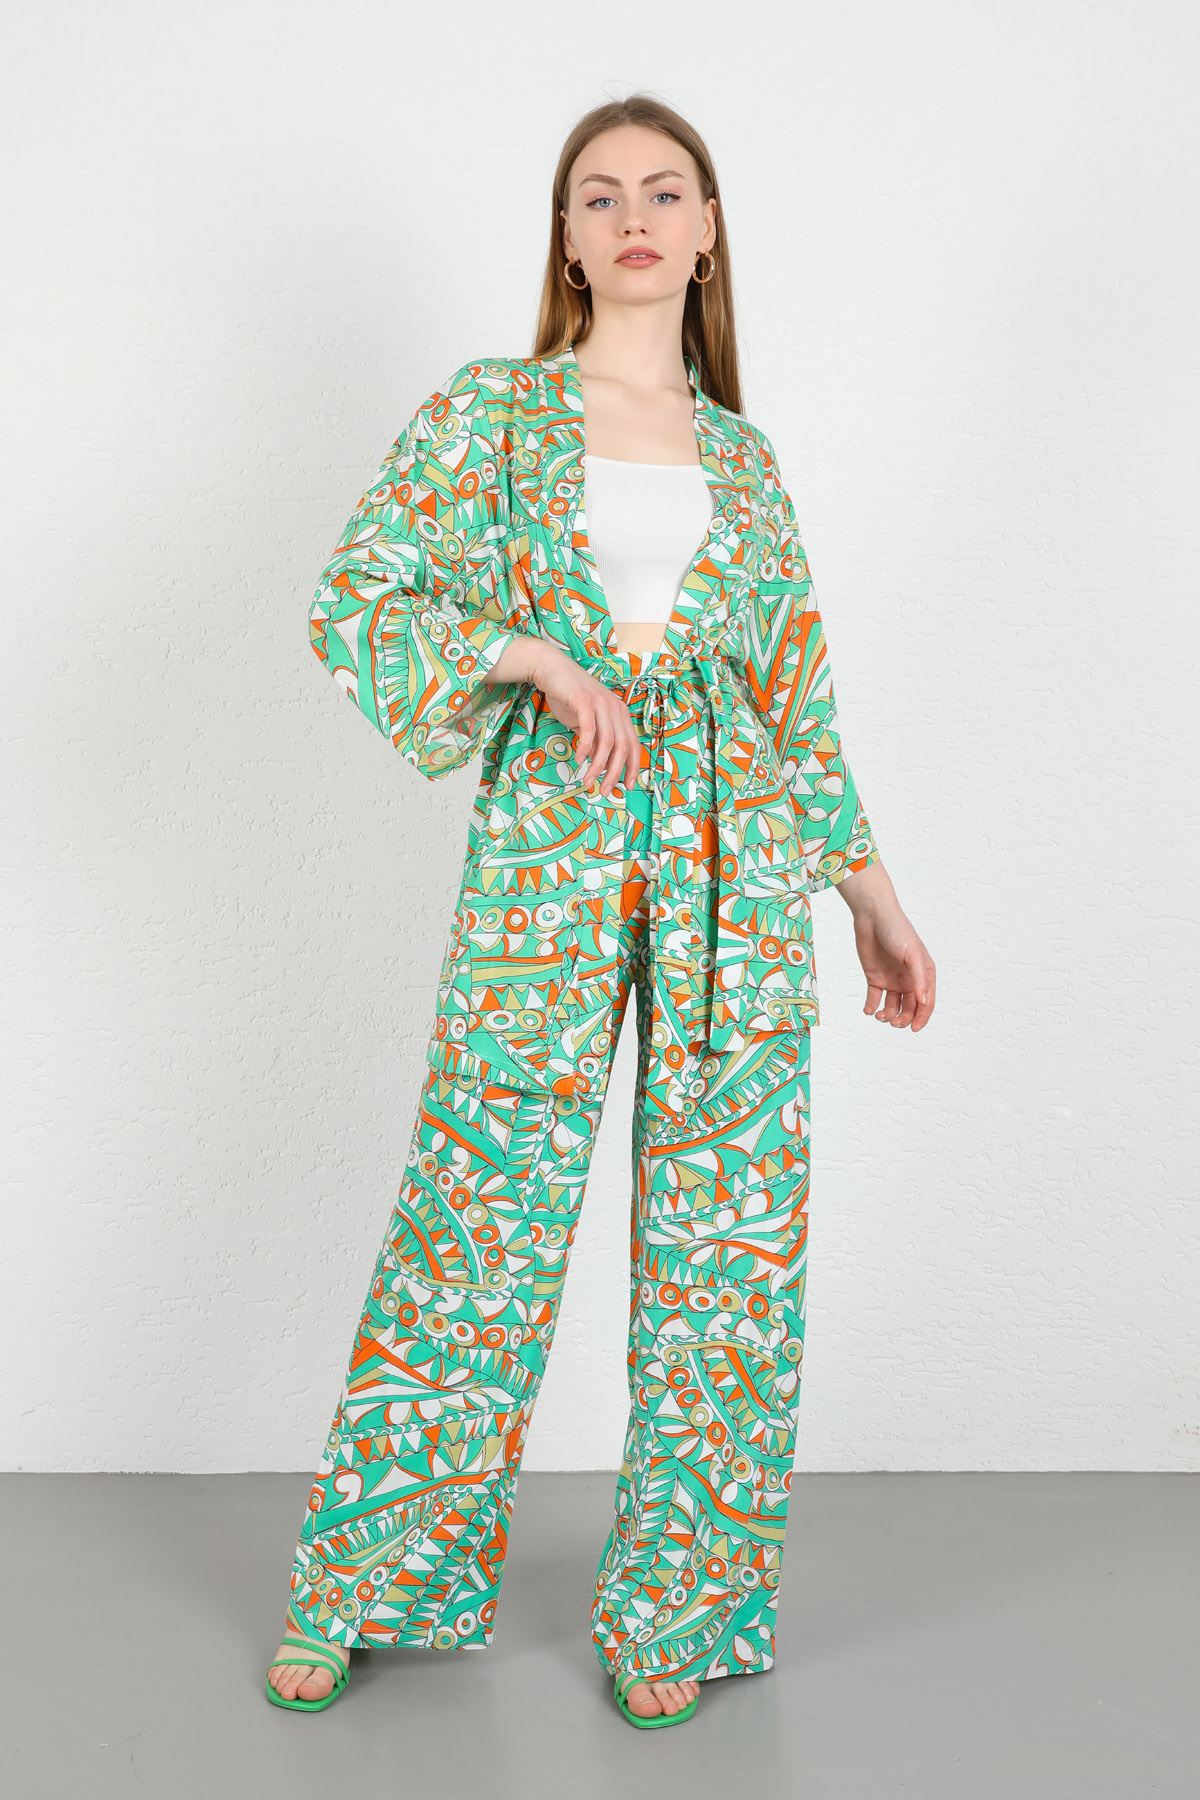 Viscon Fabric Geometric Pattern Women Kimono-Green